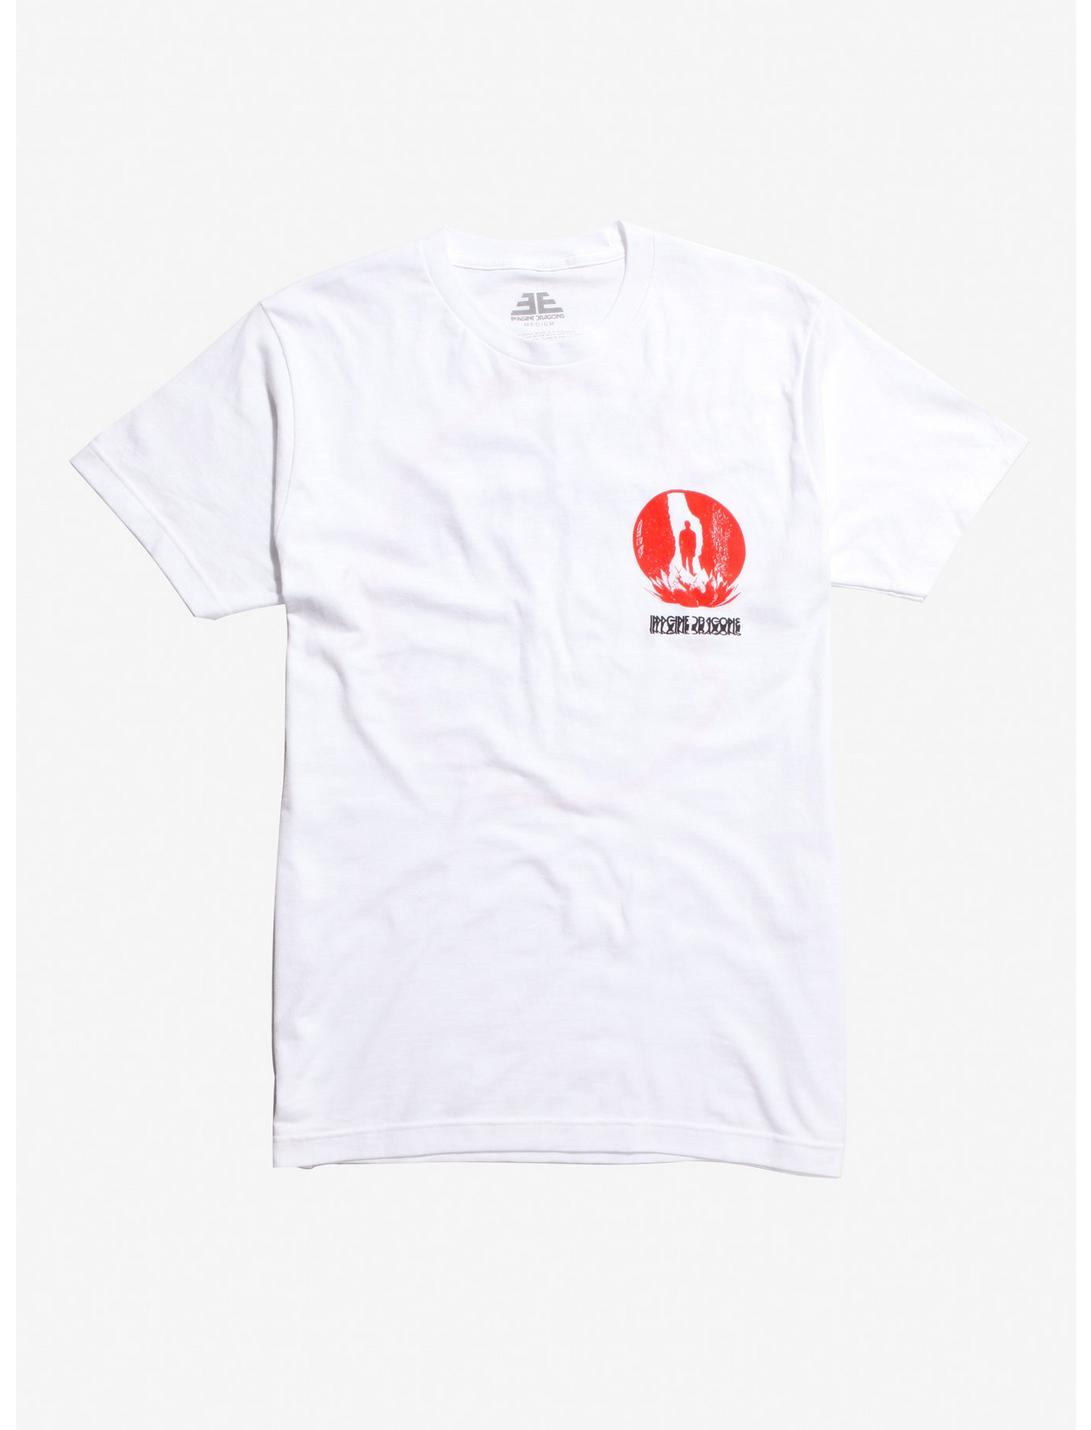 Imagine Dragons Origins T-Shirt, WHITE, hi-res